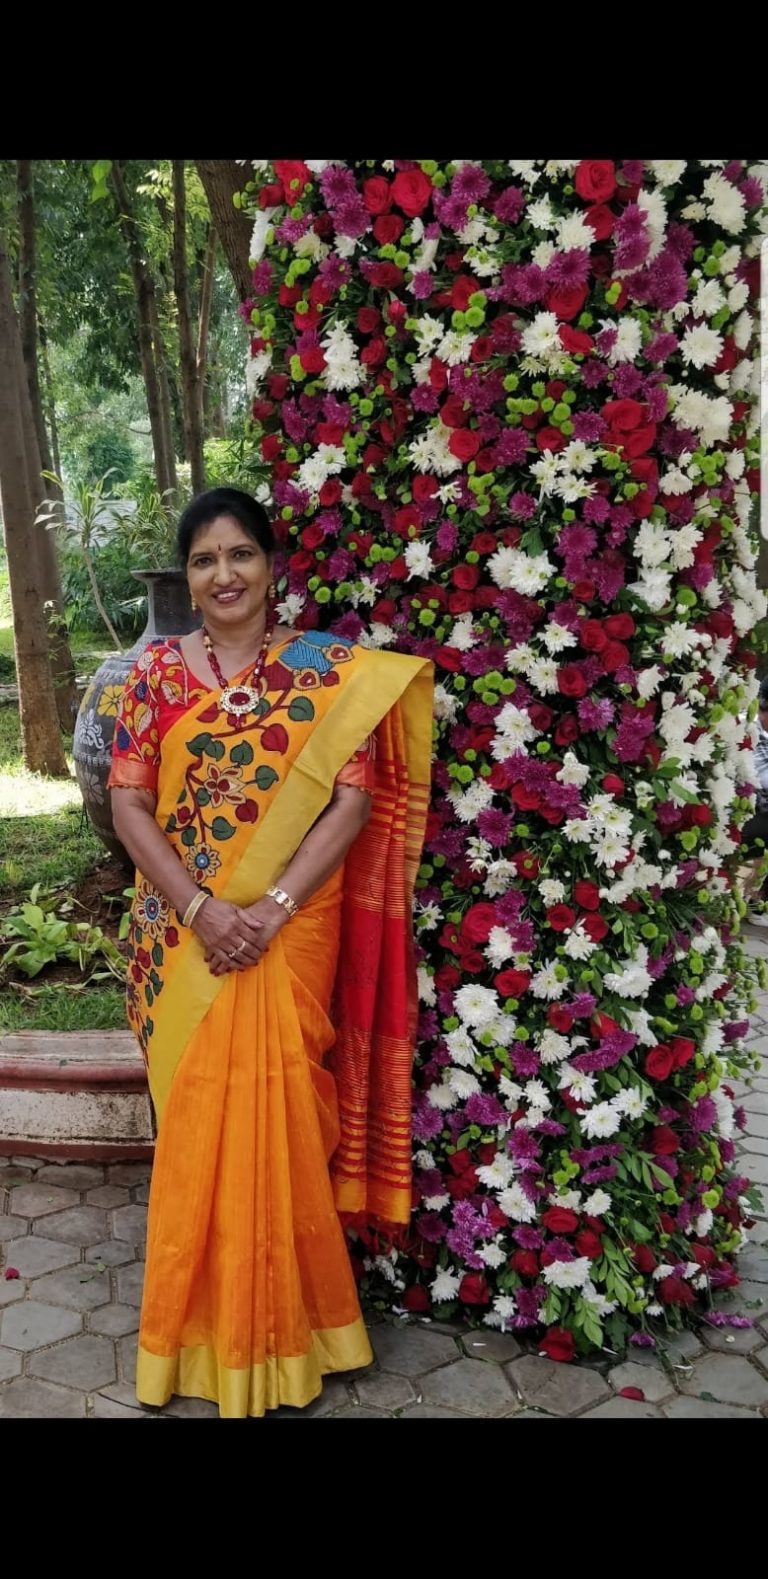 Meet Hyderabad based Social Entrepreneur Padma Sarma who shares her Entrepreneurial Journey on International Women’s Day